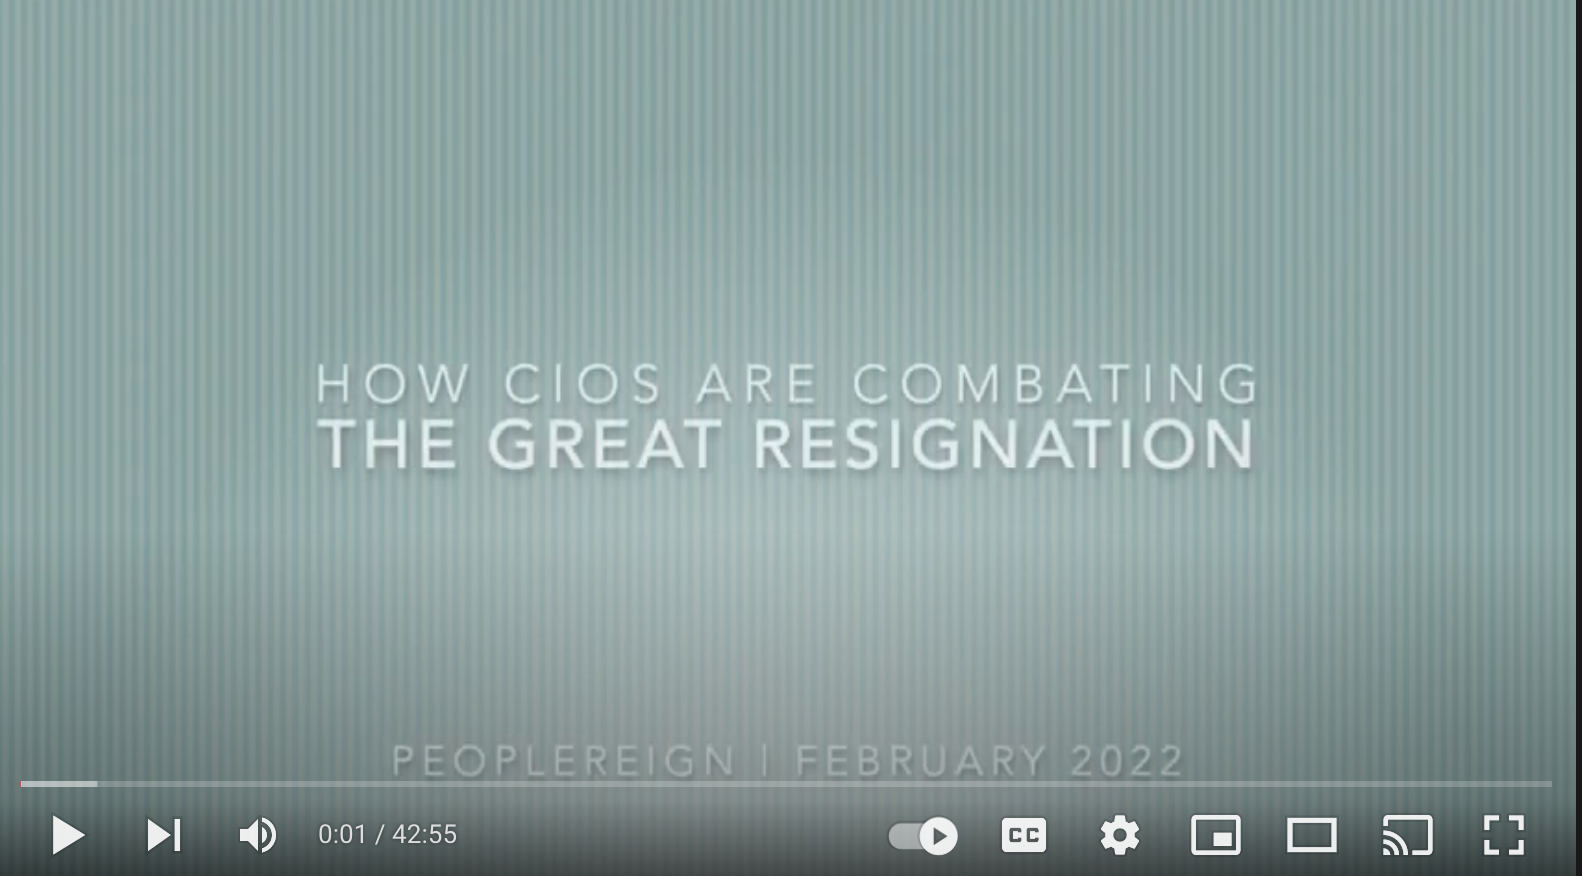 Great resignation slide